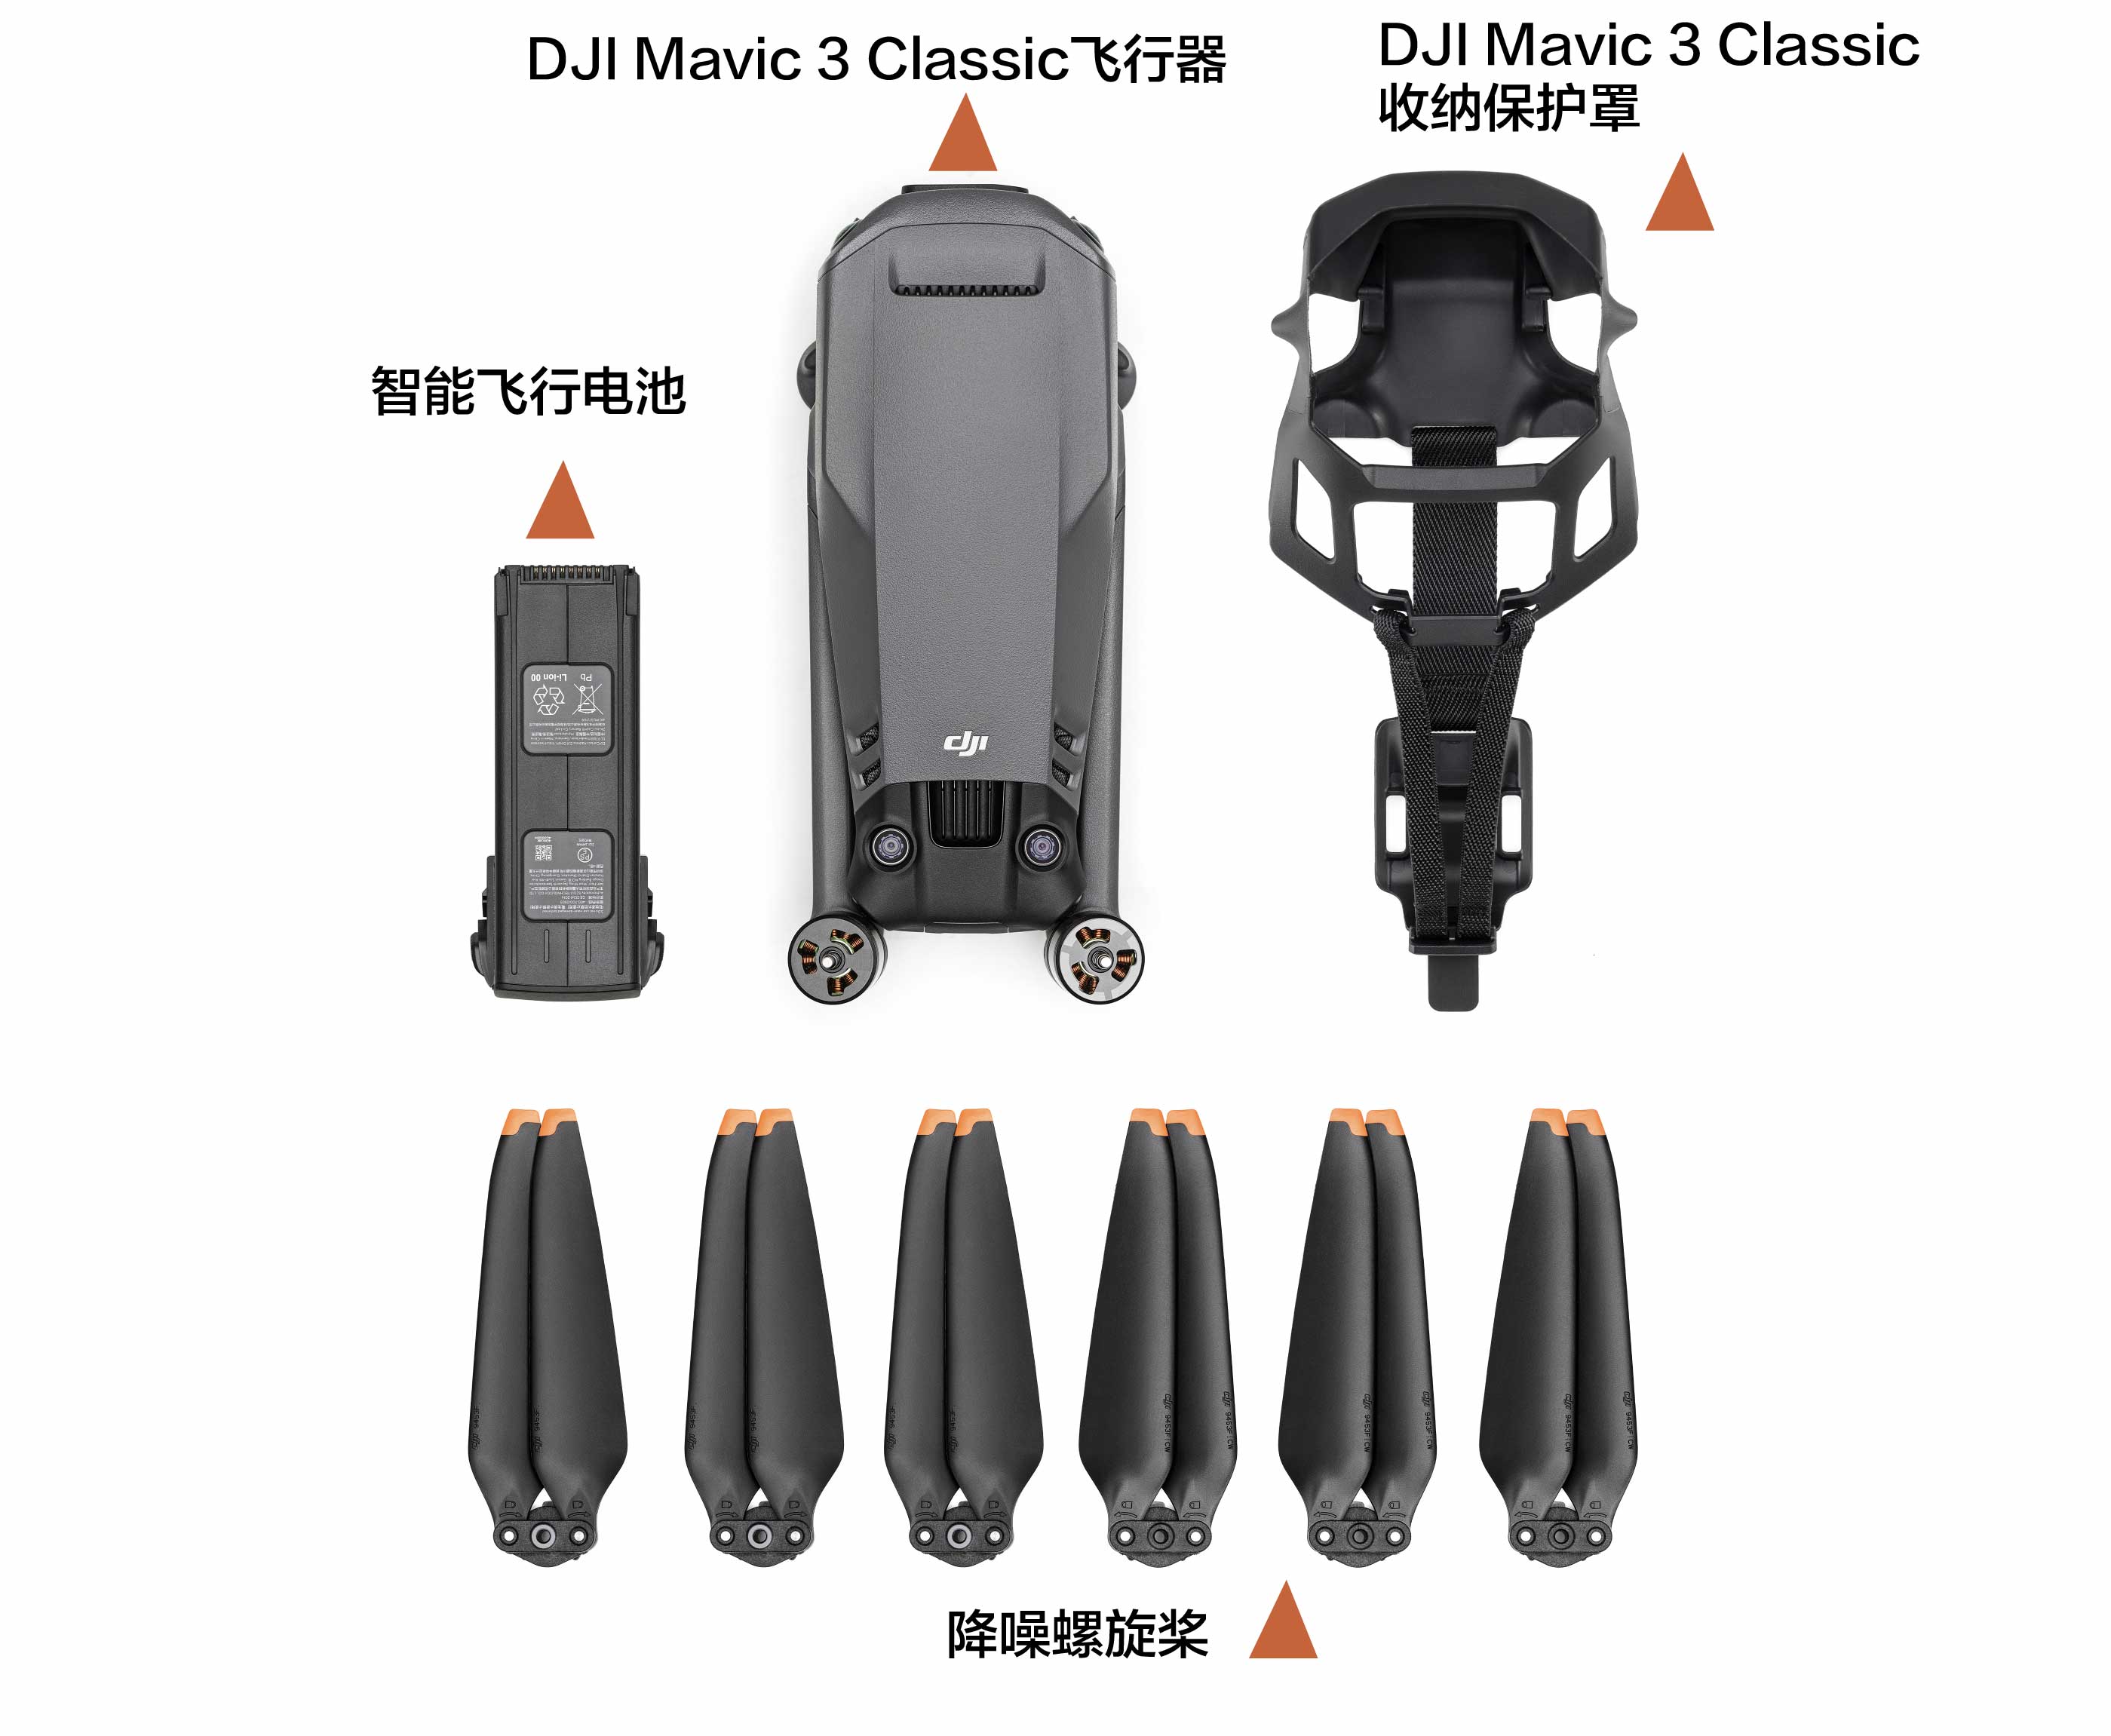 2-DJI Mavic 3 Classic 飞行器套装.jpg